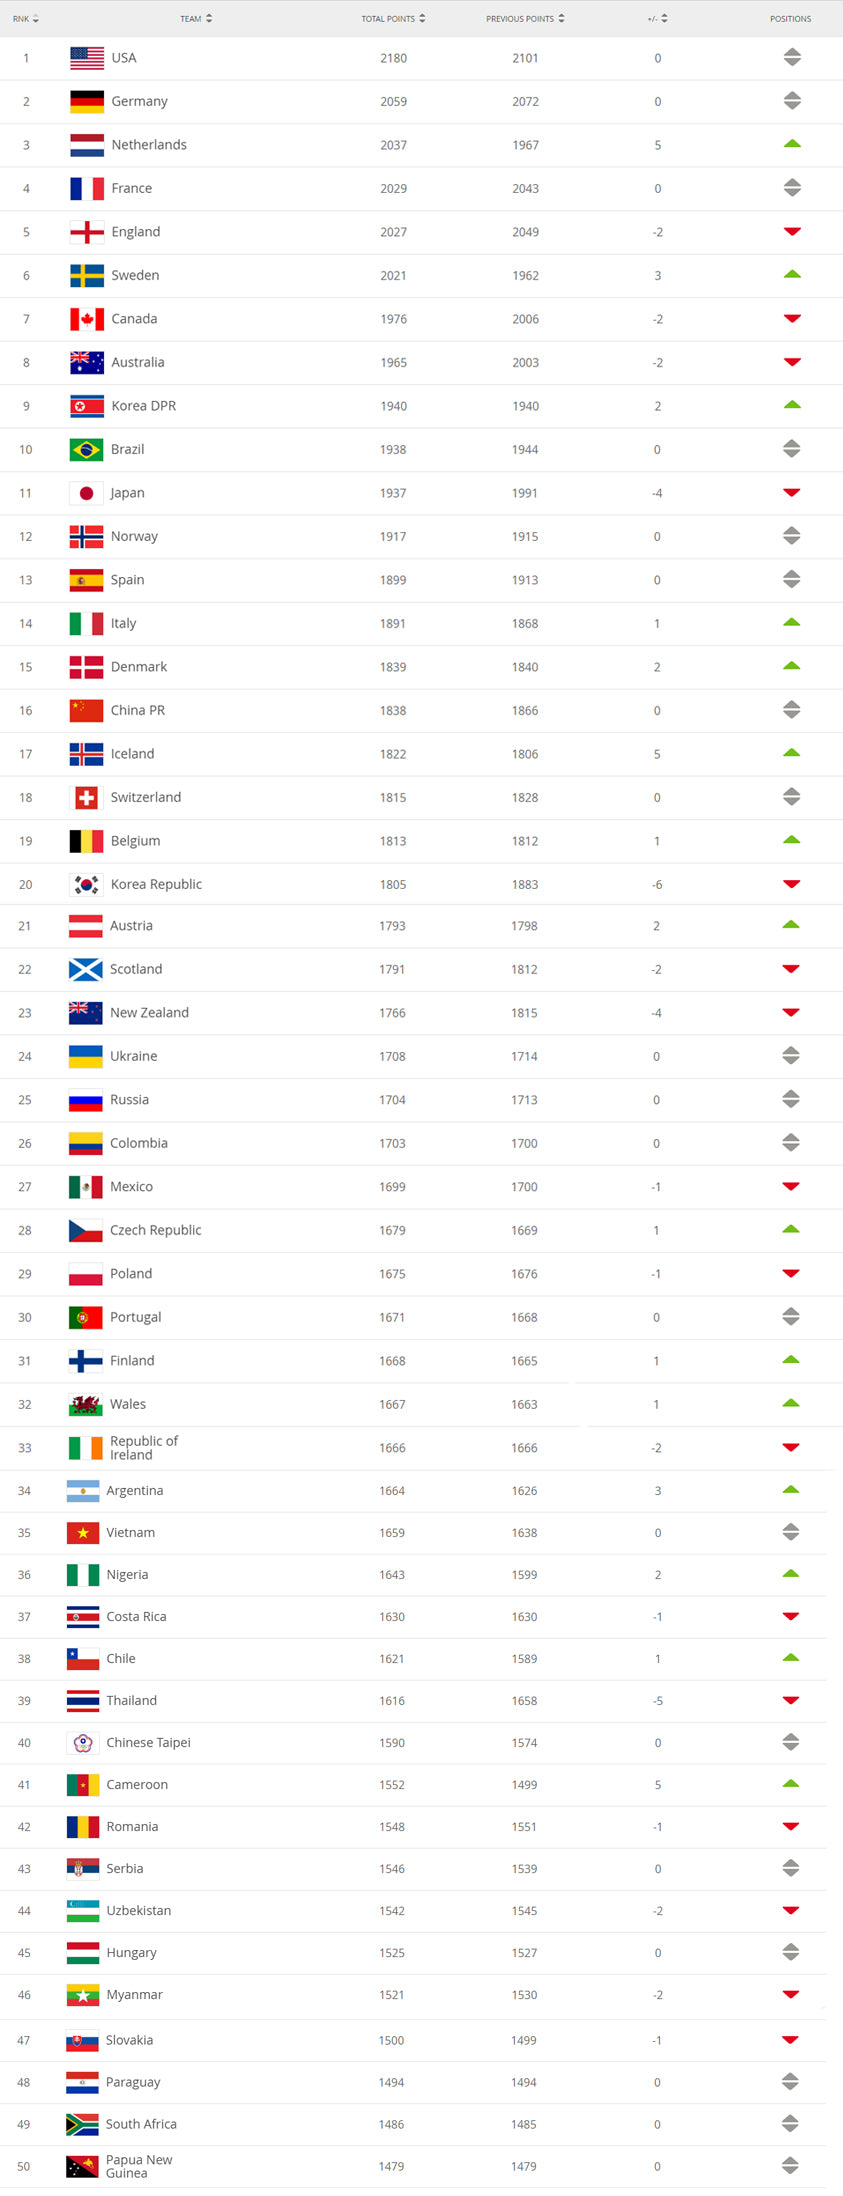 FIFA Women's World Cup 2023 Power Rankings